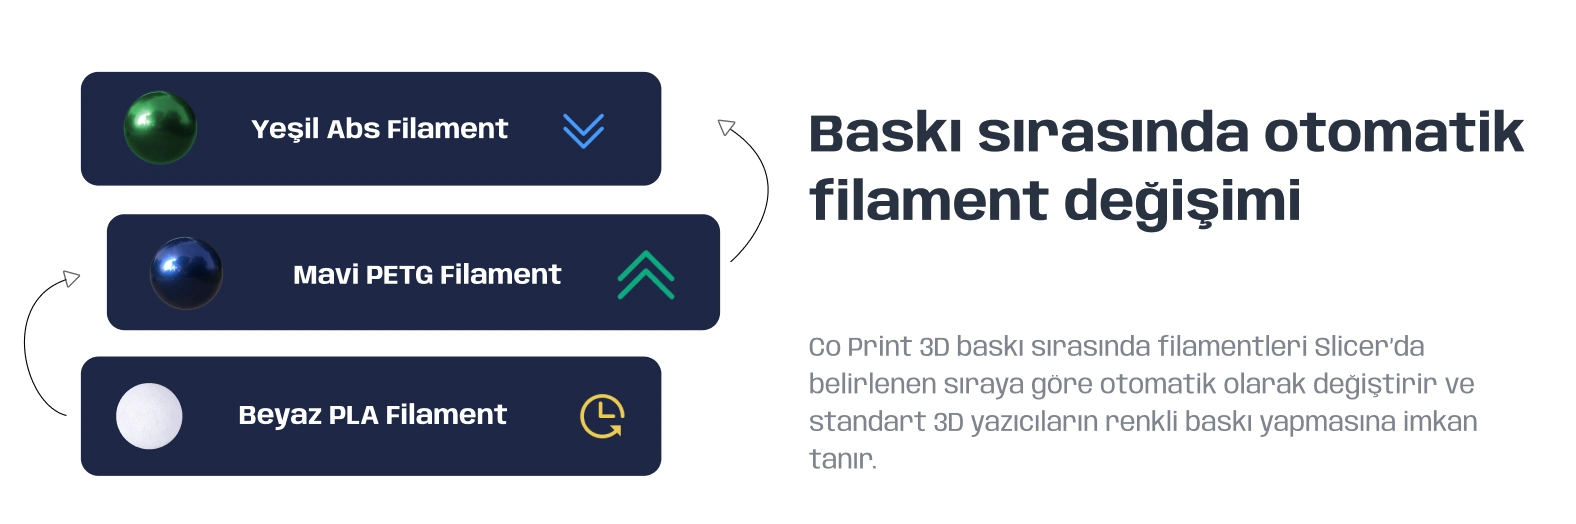 co-print-filament-değisimi.webp (62 KB)